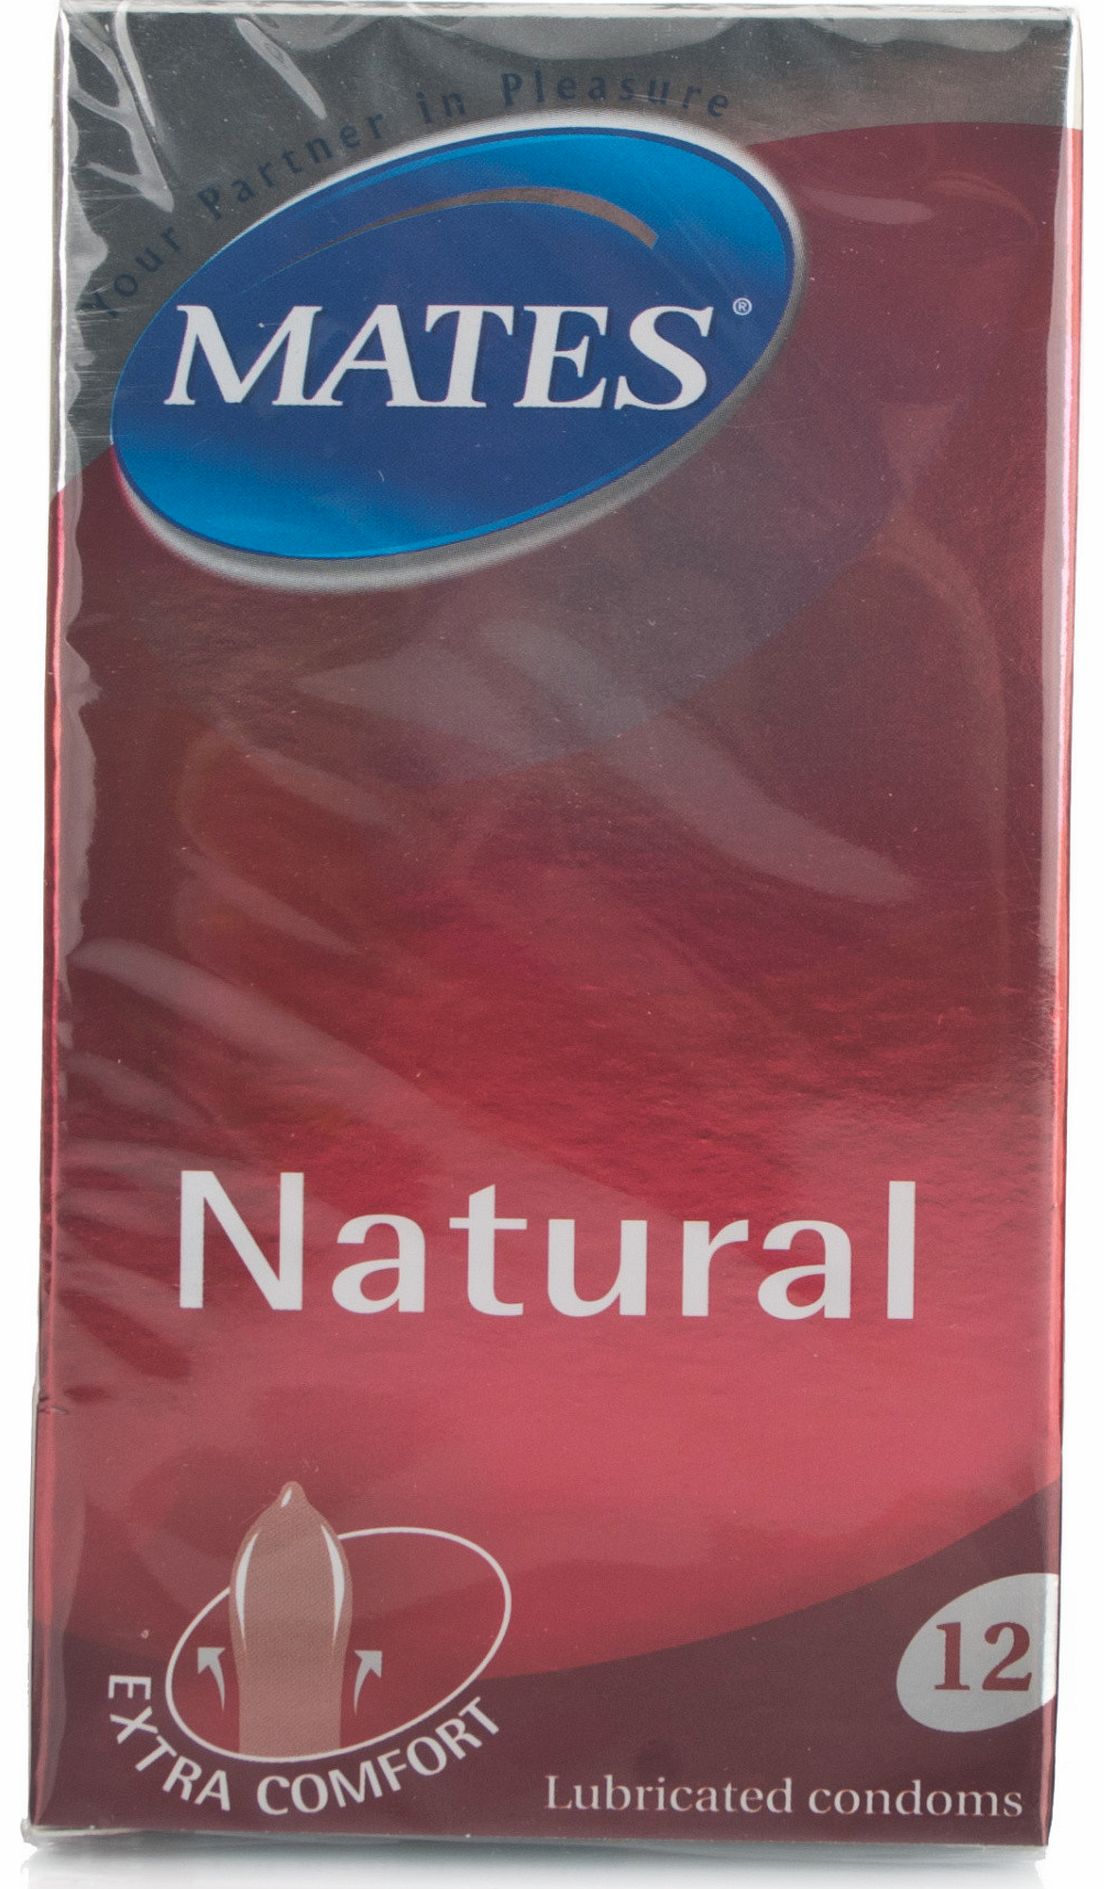 Mates Natural Condoms